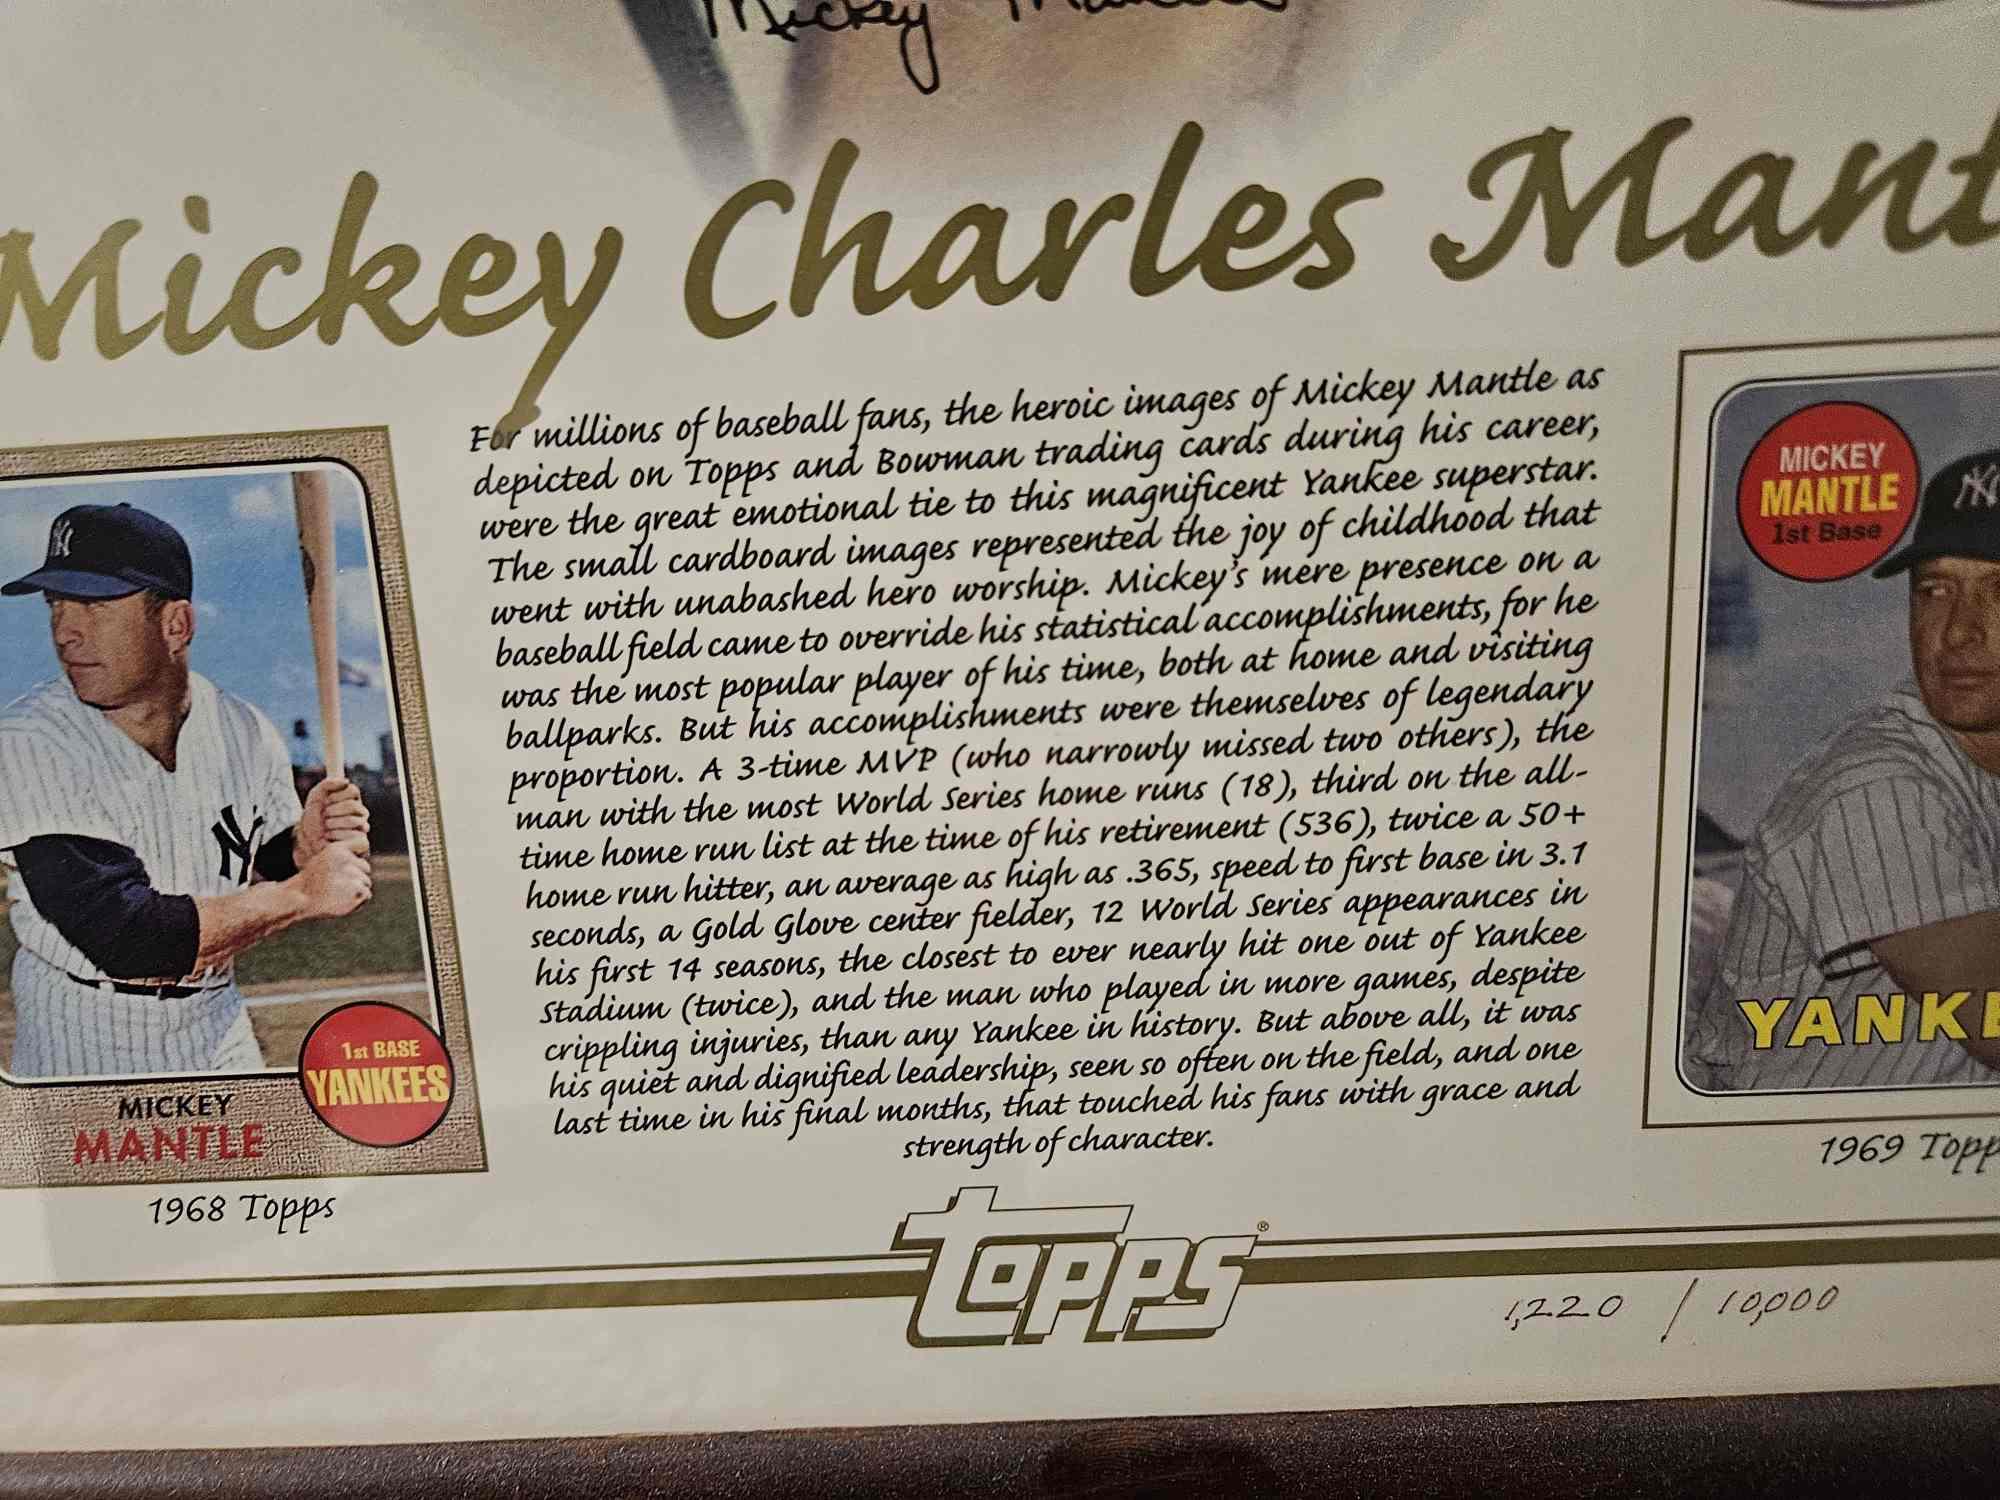 FRAMED POSTER OF MICKEY MANTEL BASEBALL CARDS